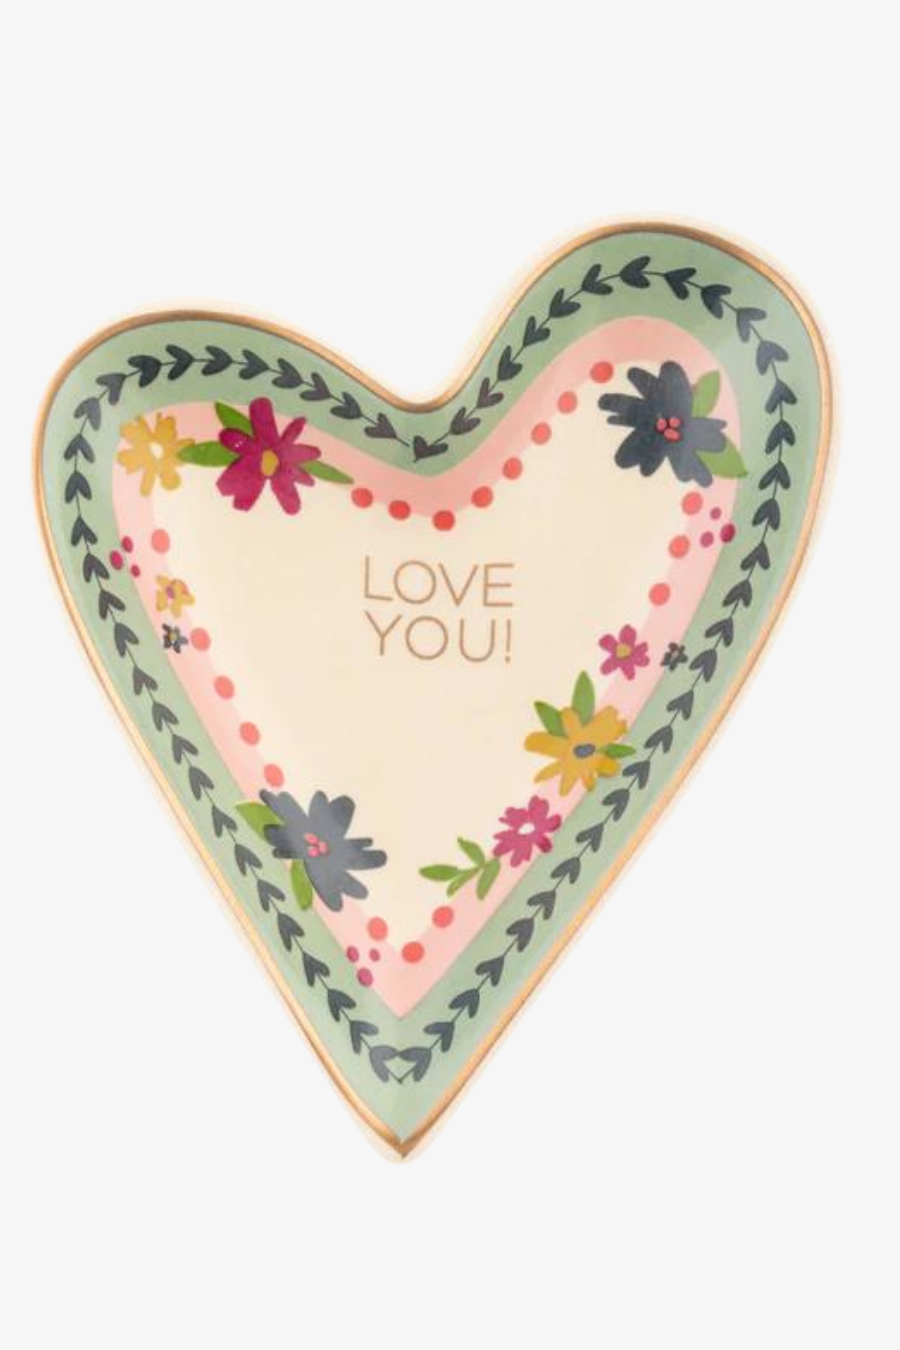 "Love You" Small Heart Shape Trinket Dish